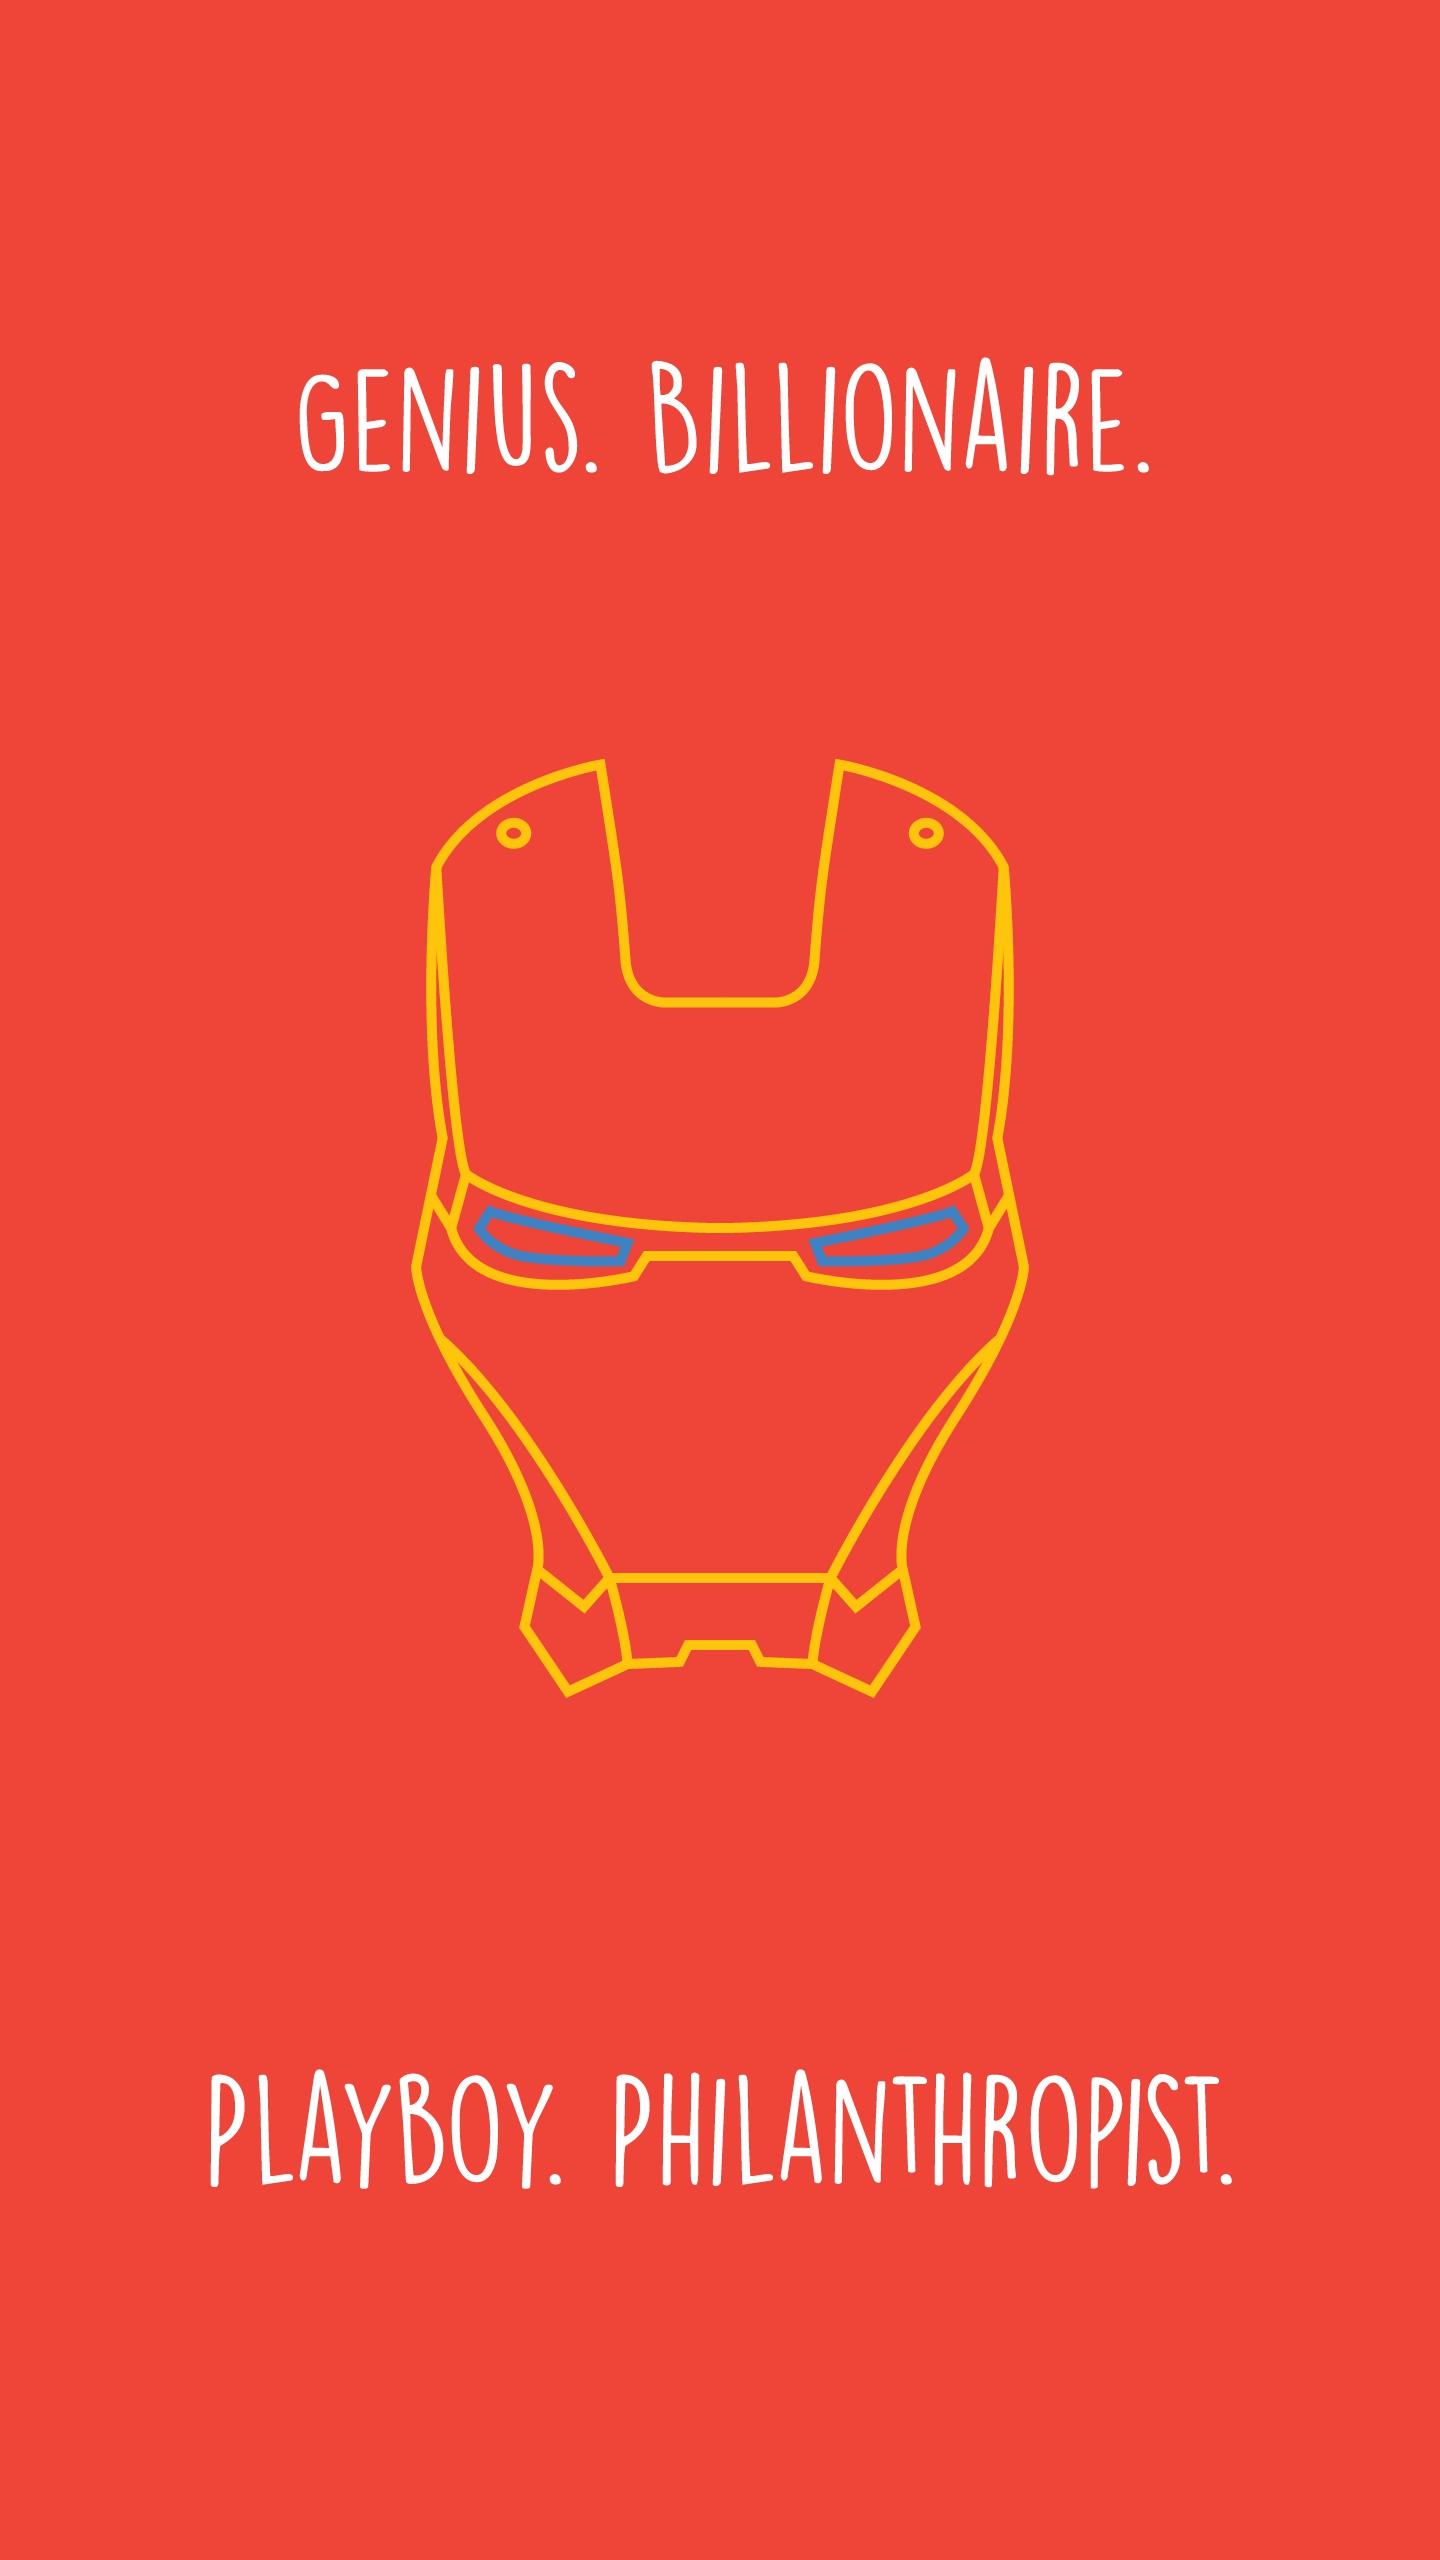 Iron Man Quote Minimal IPhone Wallpaper Wallpaper, iPhone Wallpaper